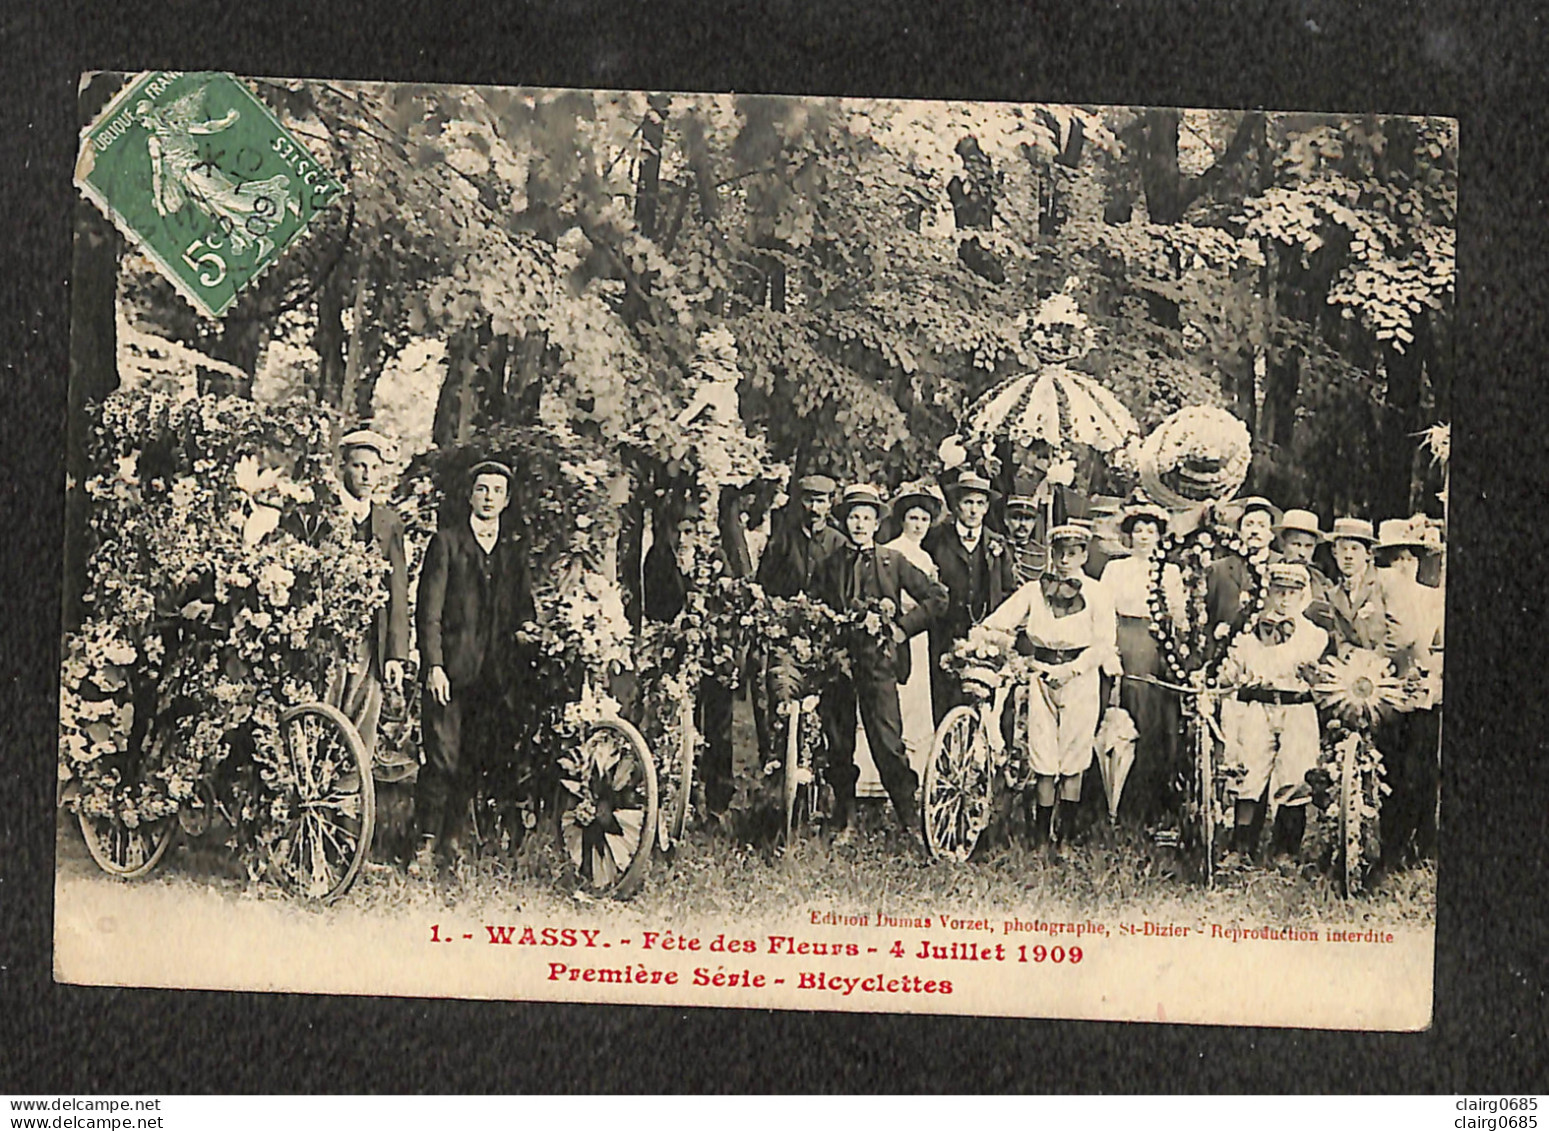 52 - WASSY - Fête Des Fleurs - 4 Juillet 1909 - Bicyclettes - 1909 - Wassy